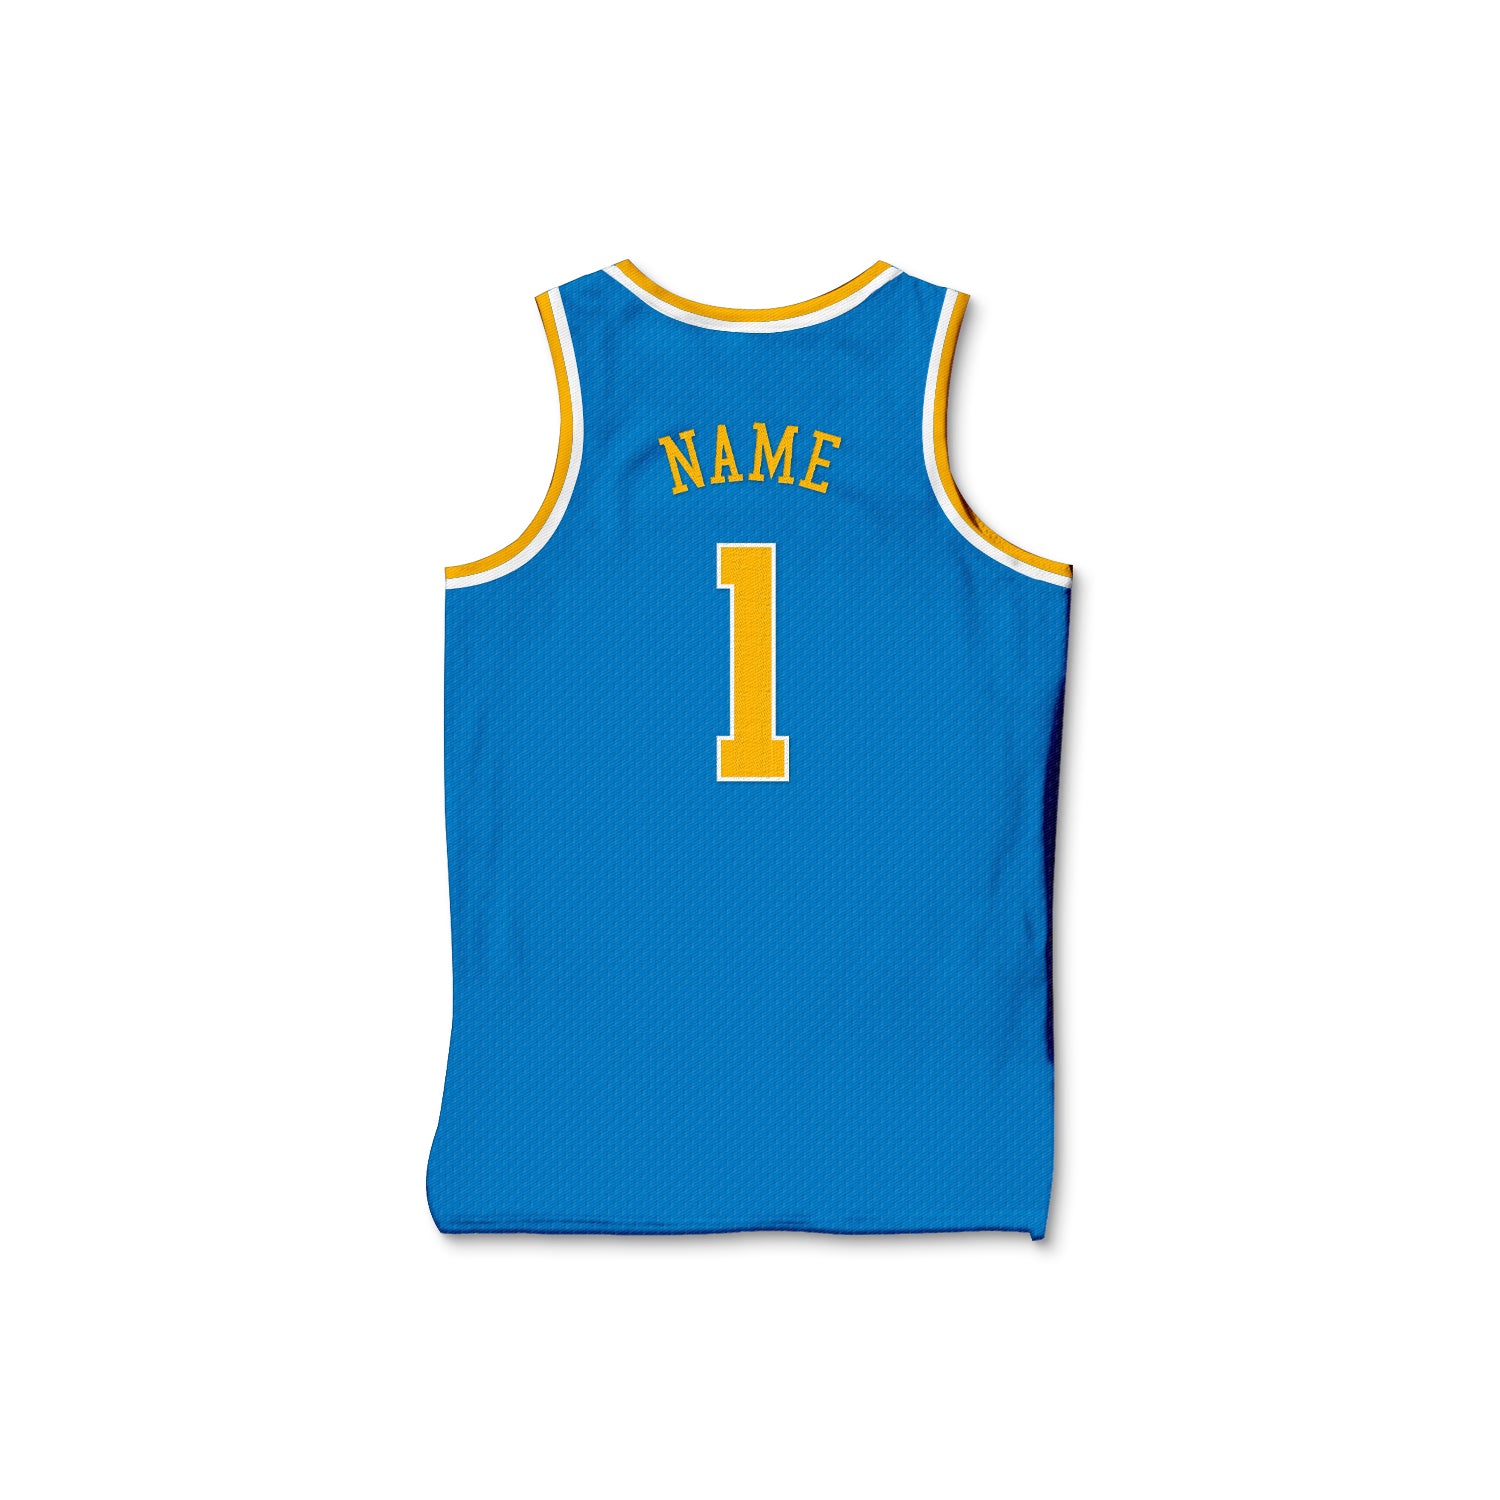 Customizable "Bruin" Groomsmen Basketball Jersey - Blue